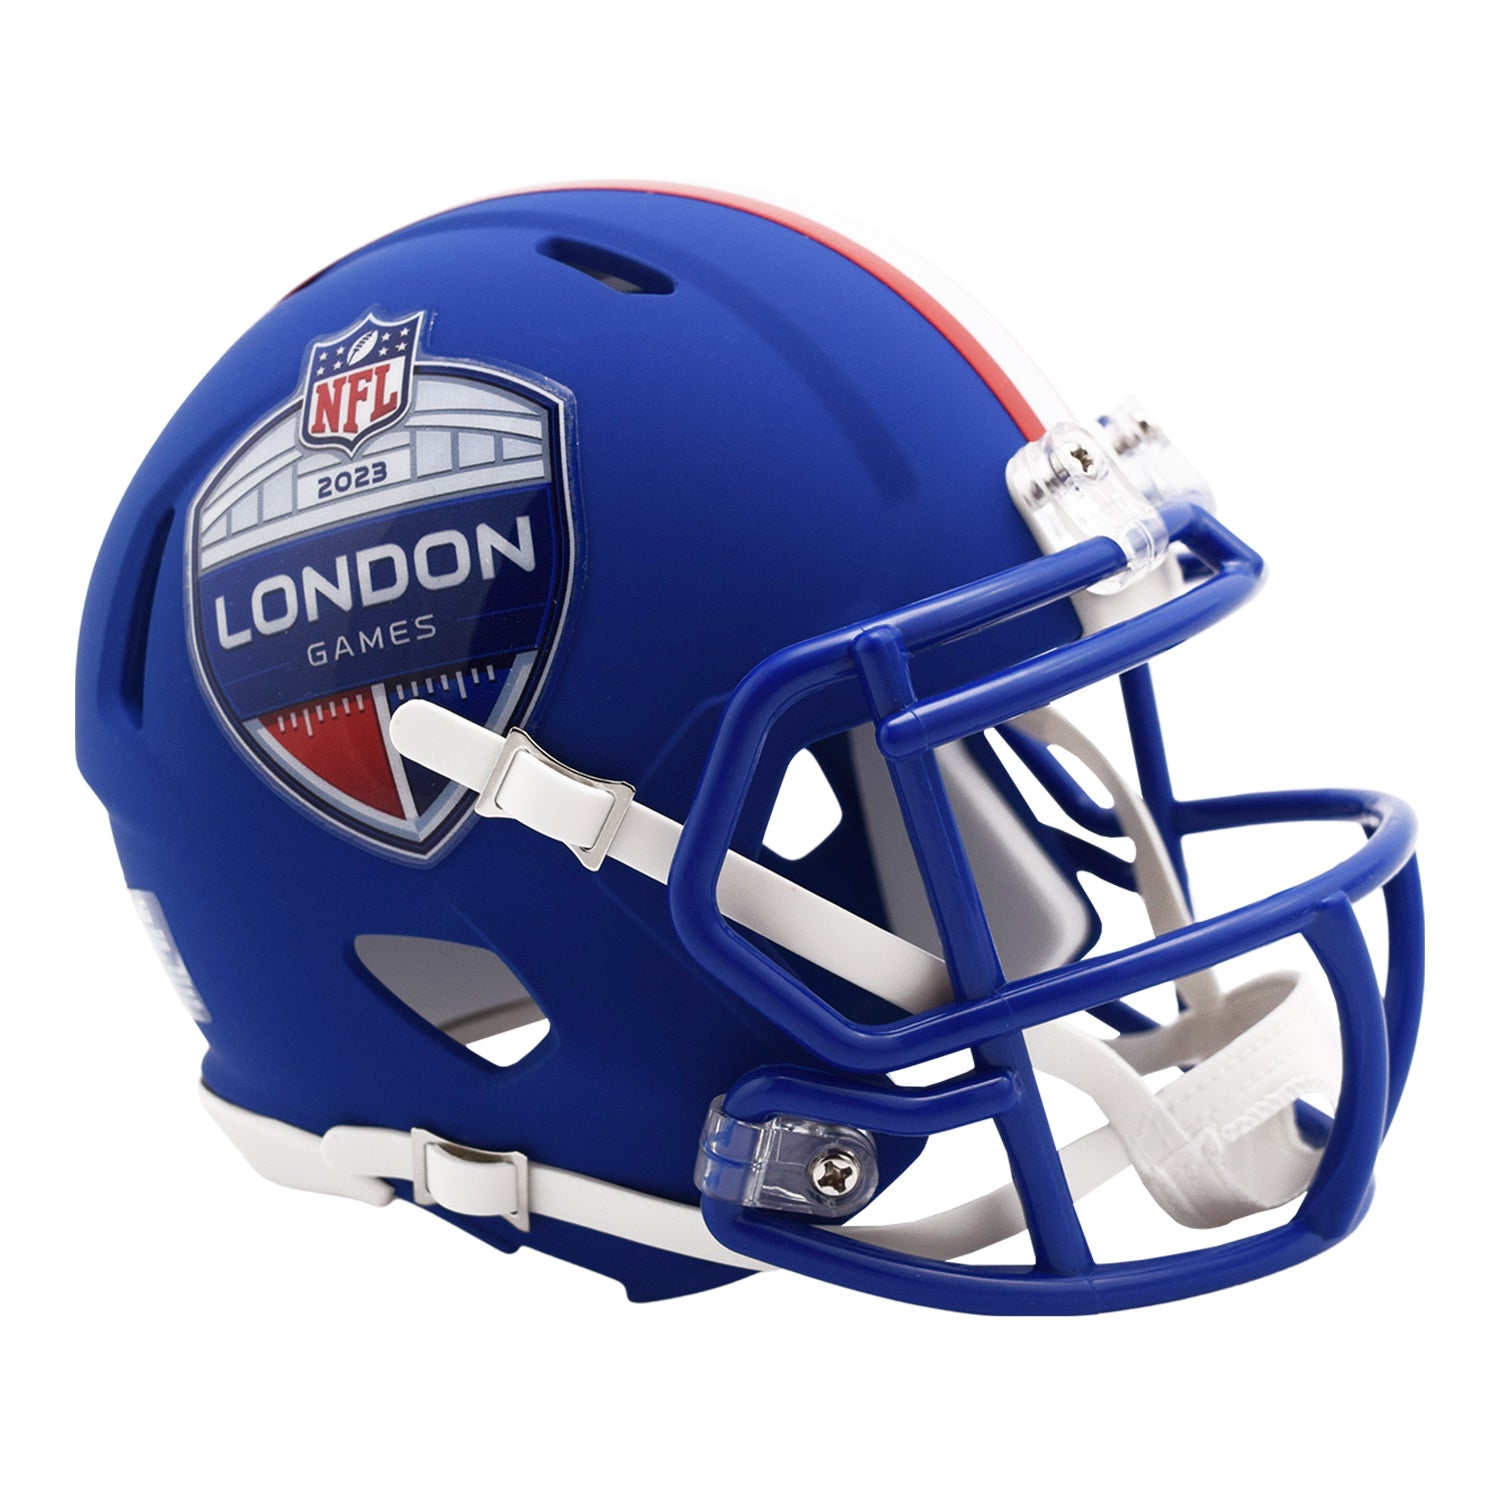 Bills Riddell London Games Mini Helmet